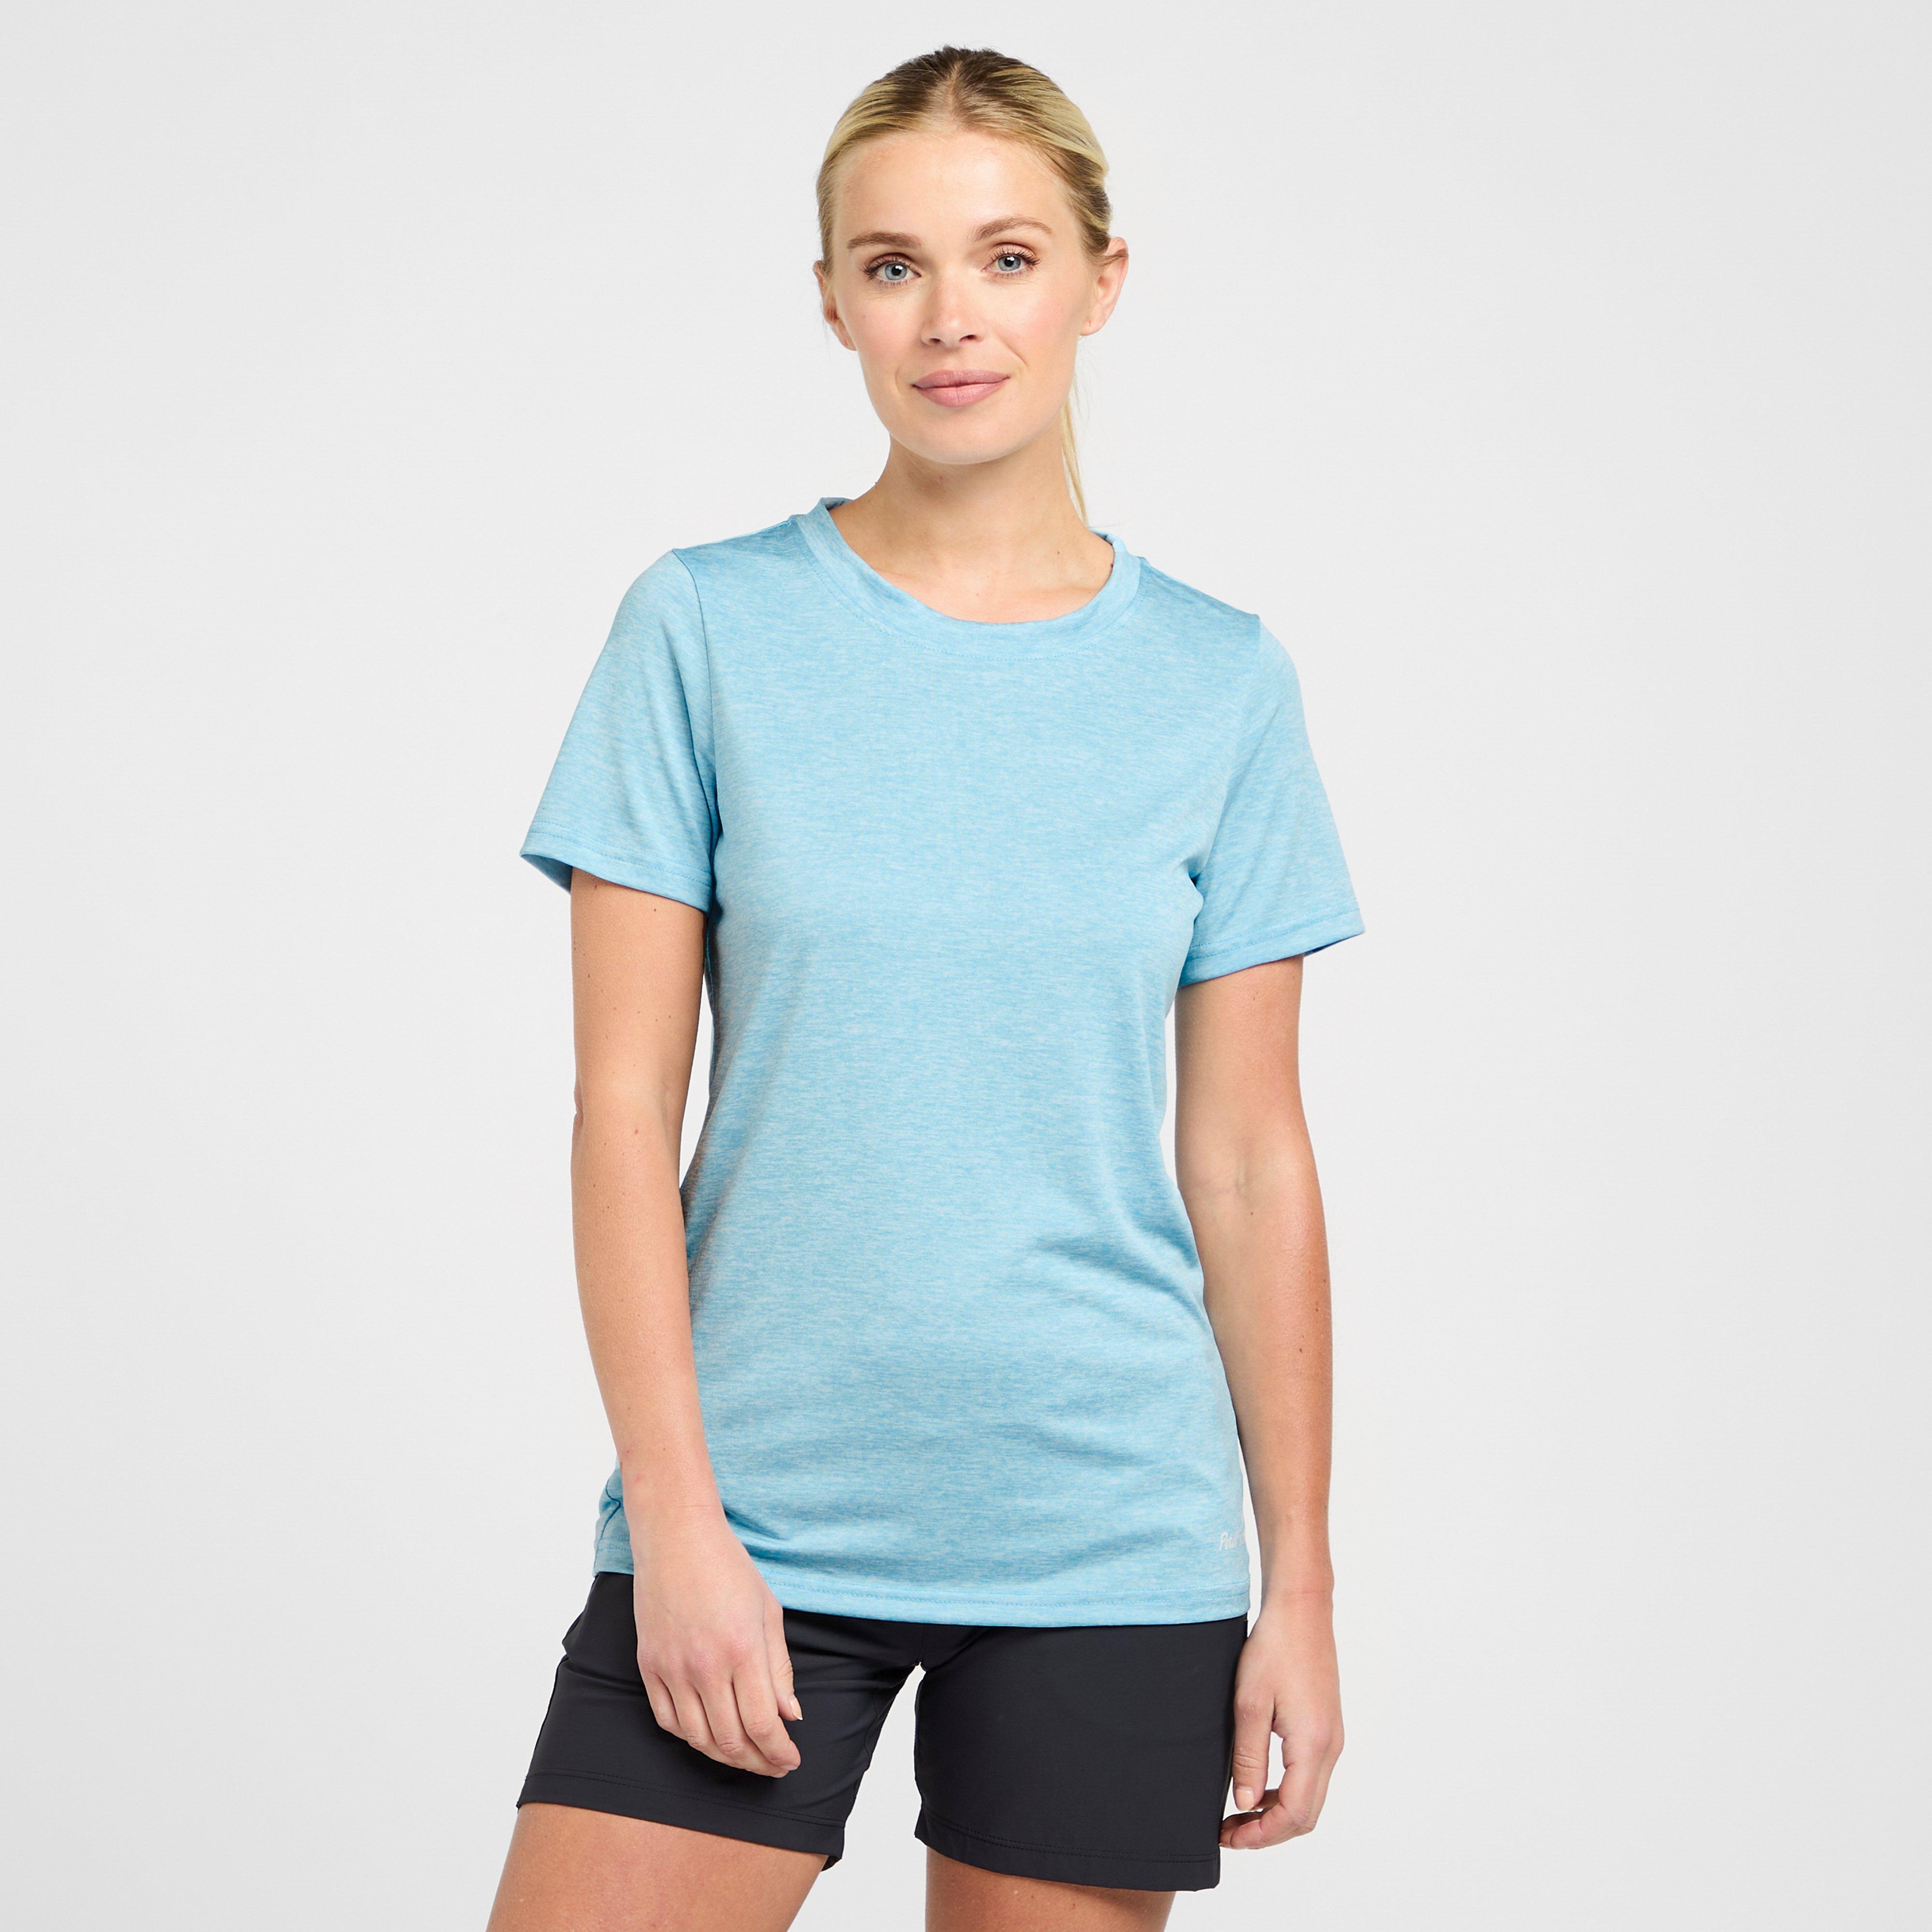 Wayleb Women's Gym Tops Ladies Sports T-Shirt, Workout Yoga Tops